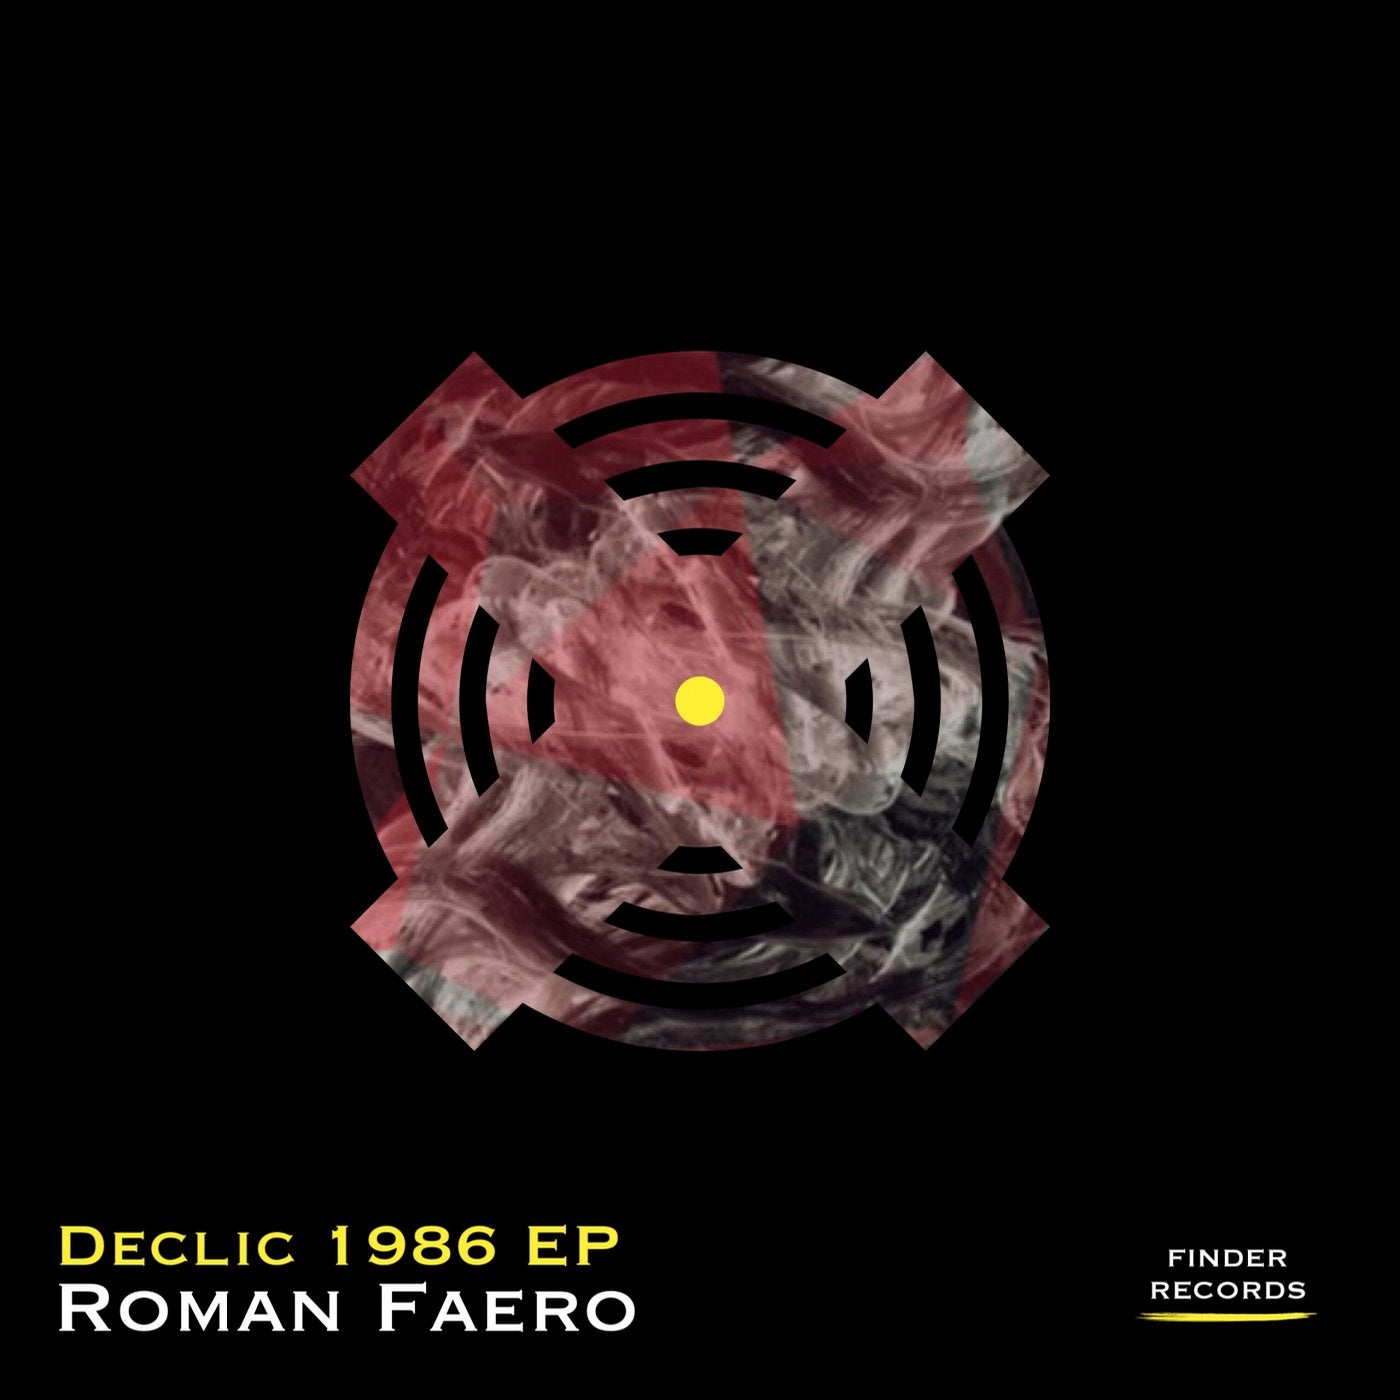 Declic 1986 EP